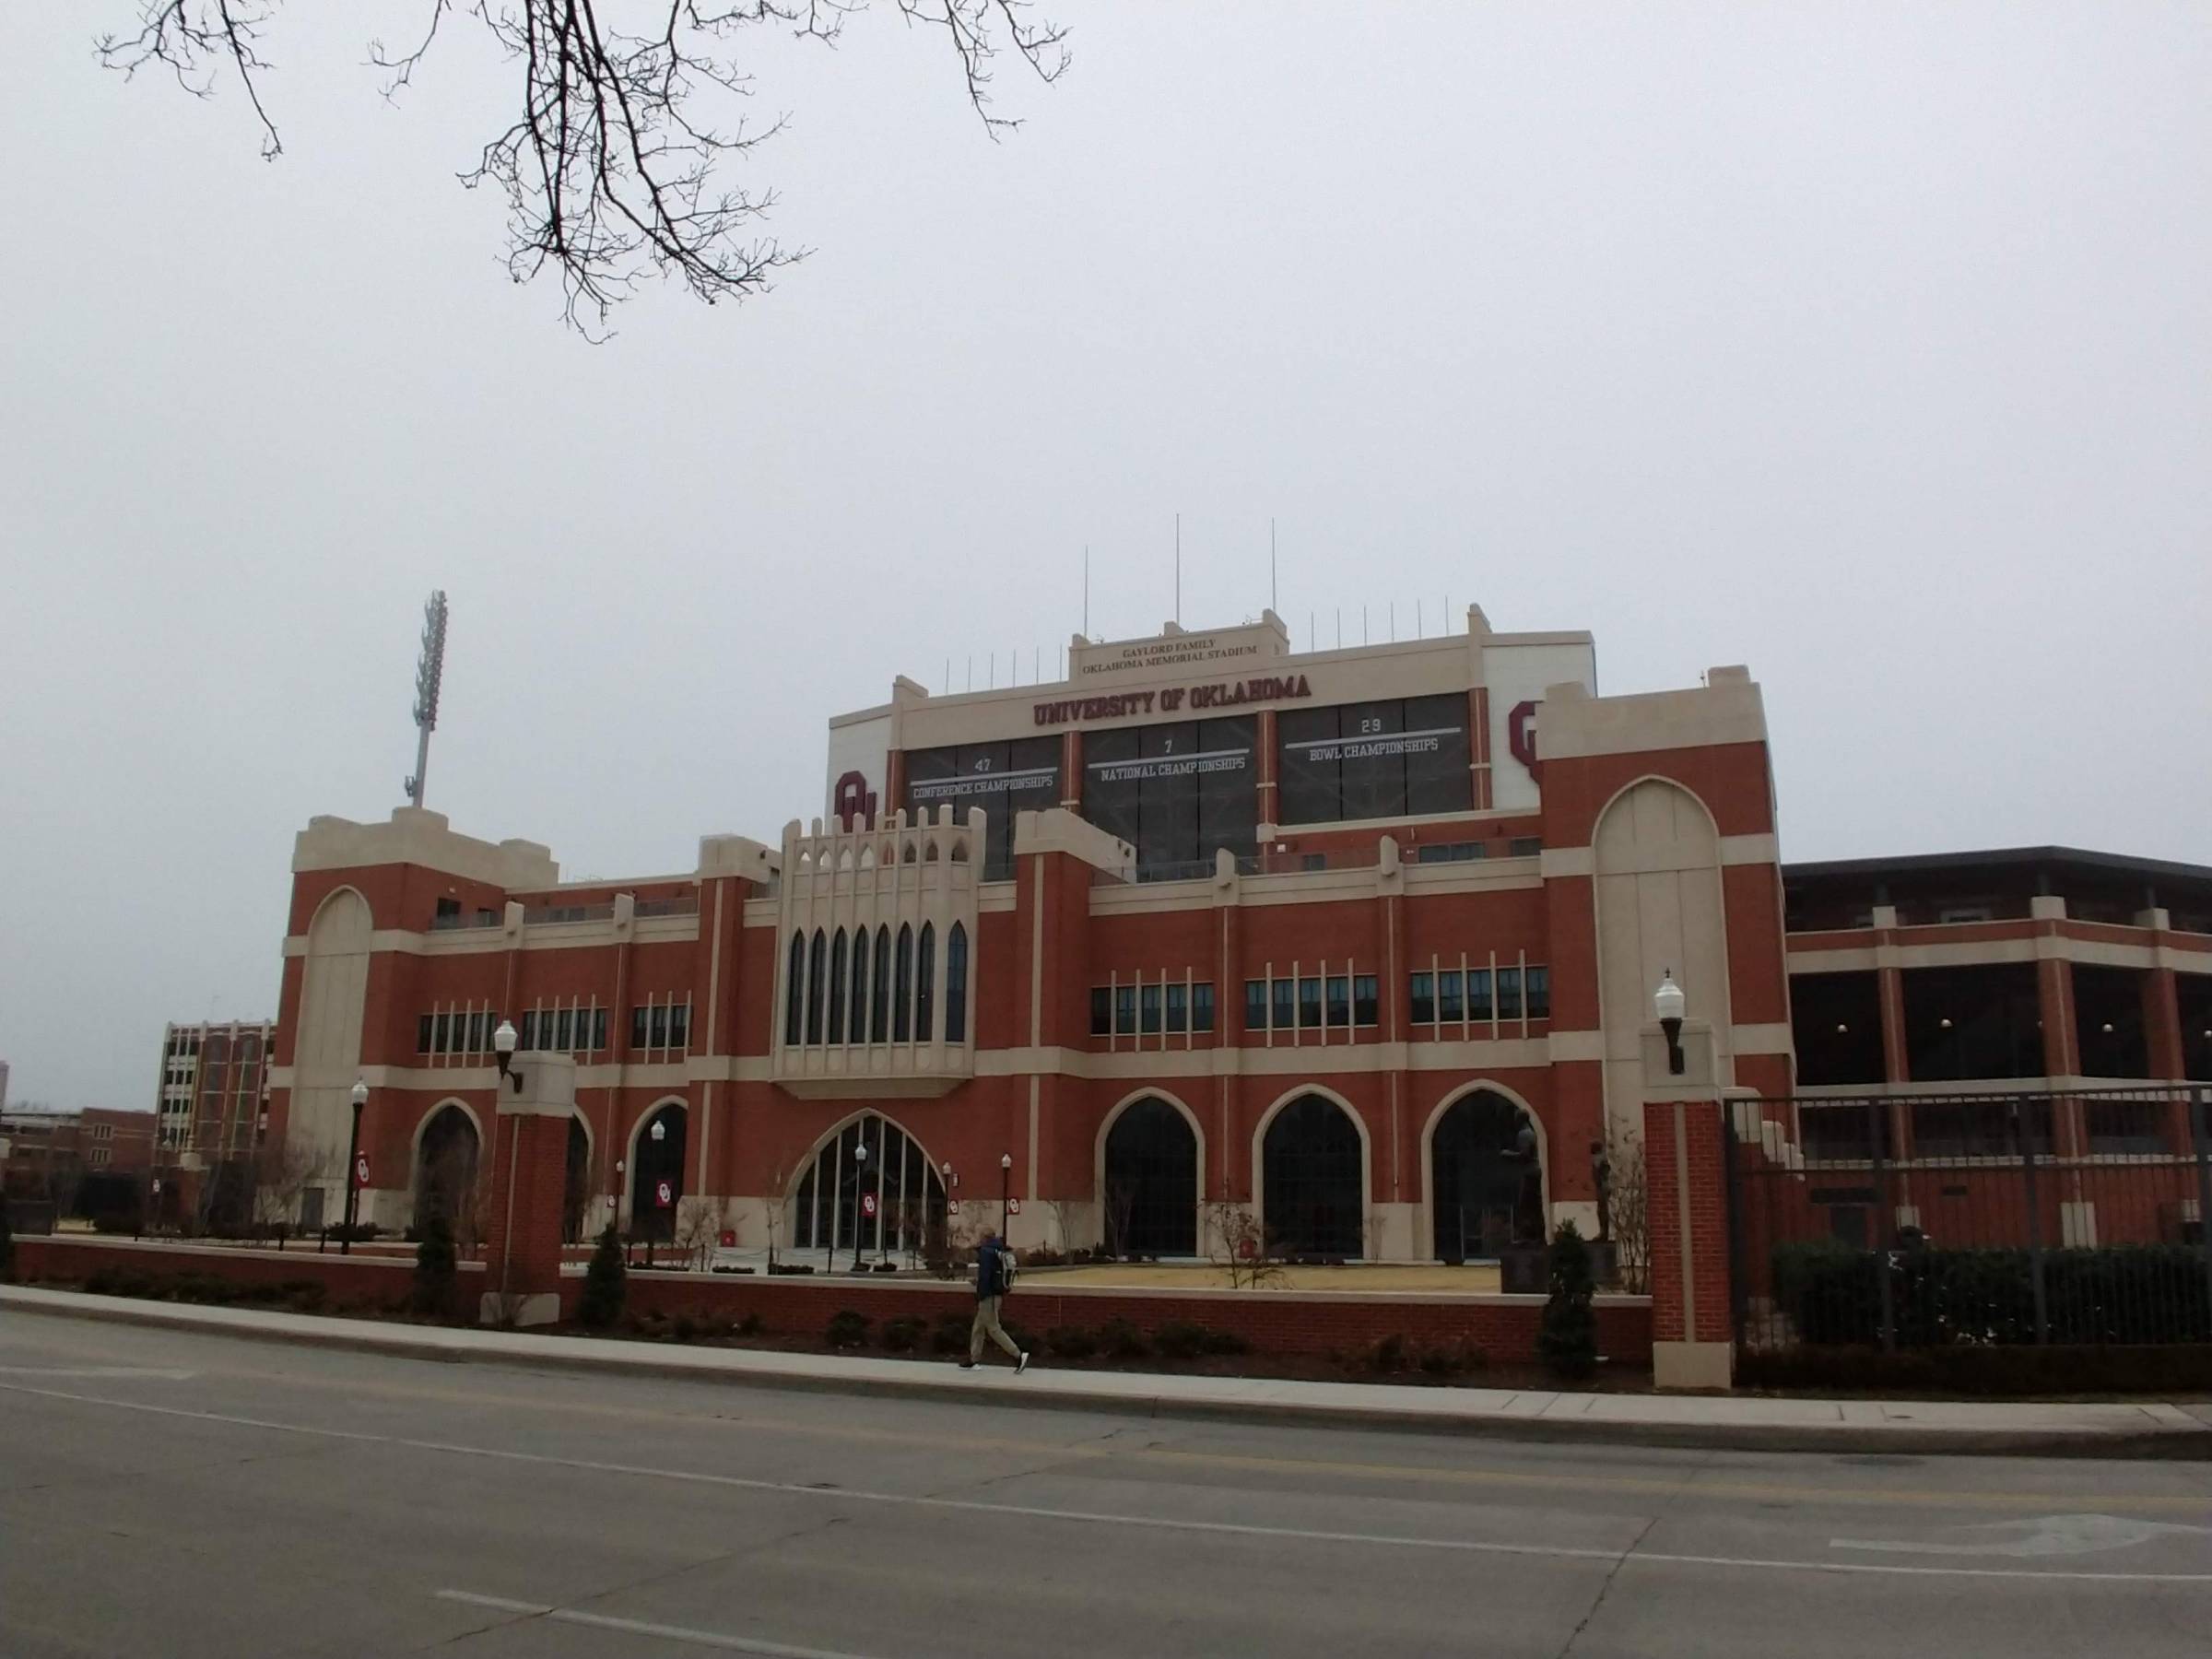 South Entrance at Oklahoma Memorial Stadium